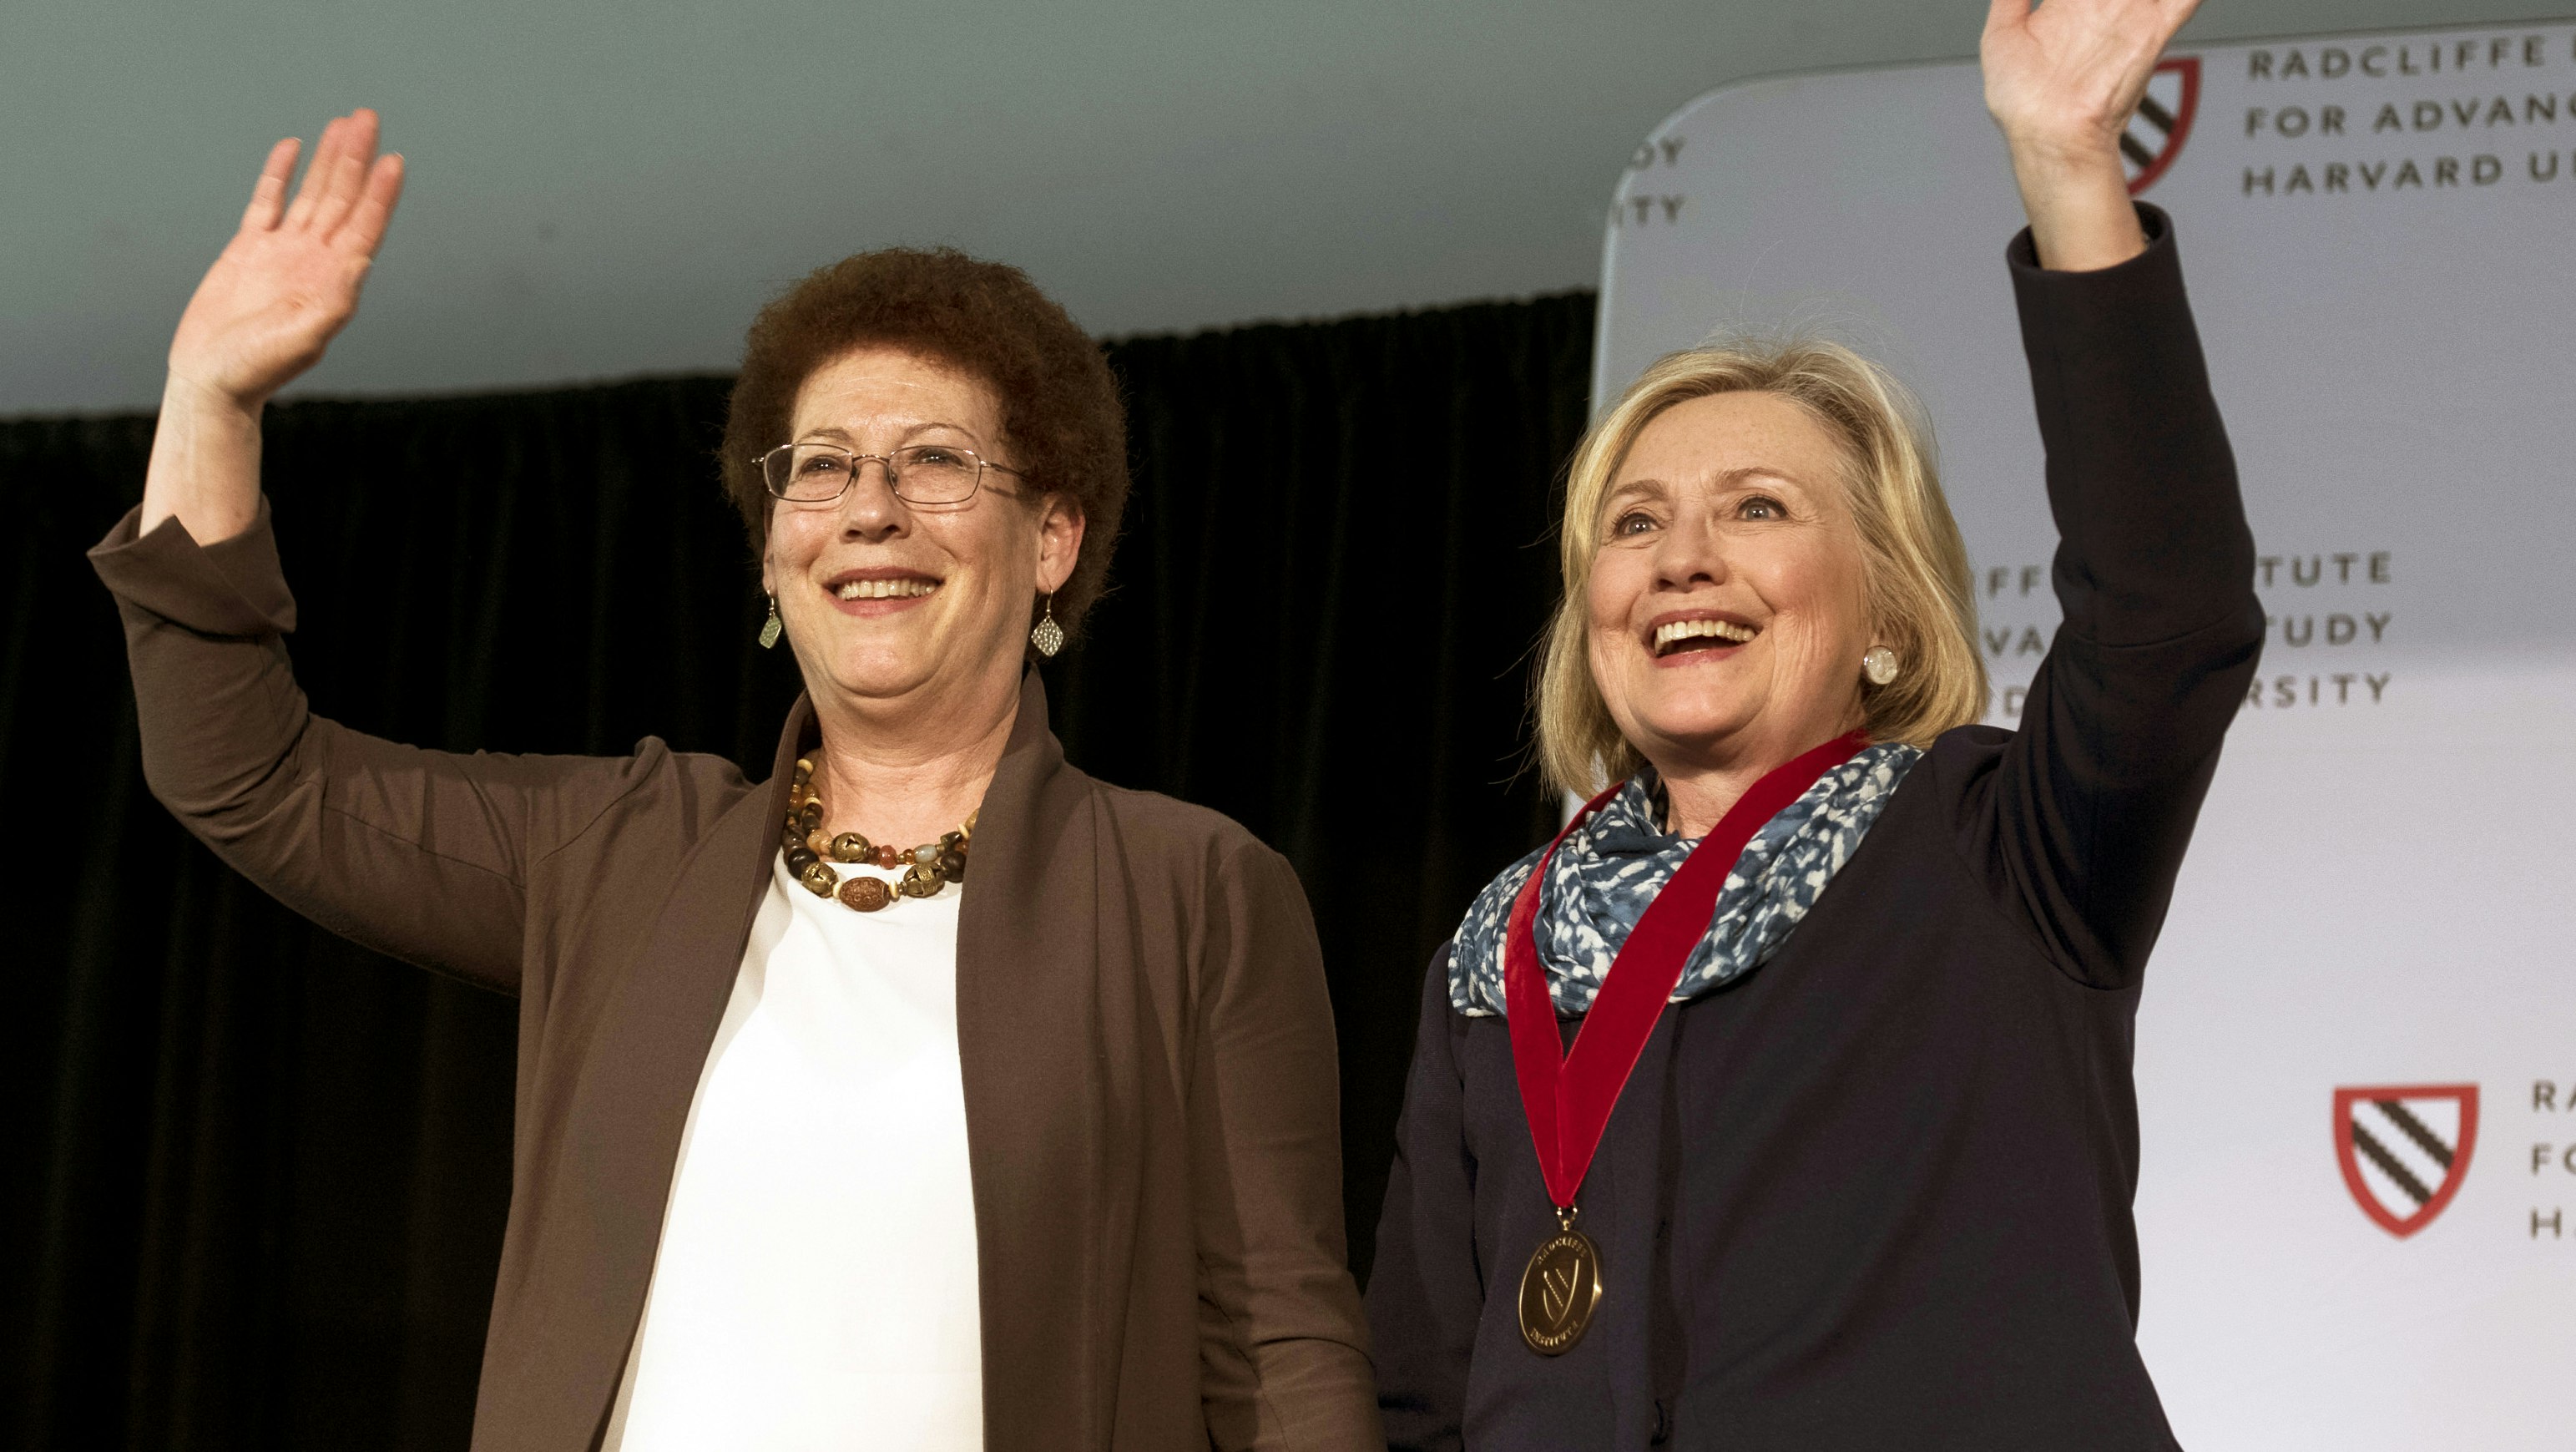 Radcliffe Dean Lizabeth Cohen and 2018 Radcliffe Medalist Hillary Rodham Clinton.